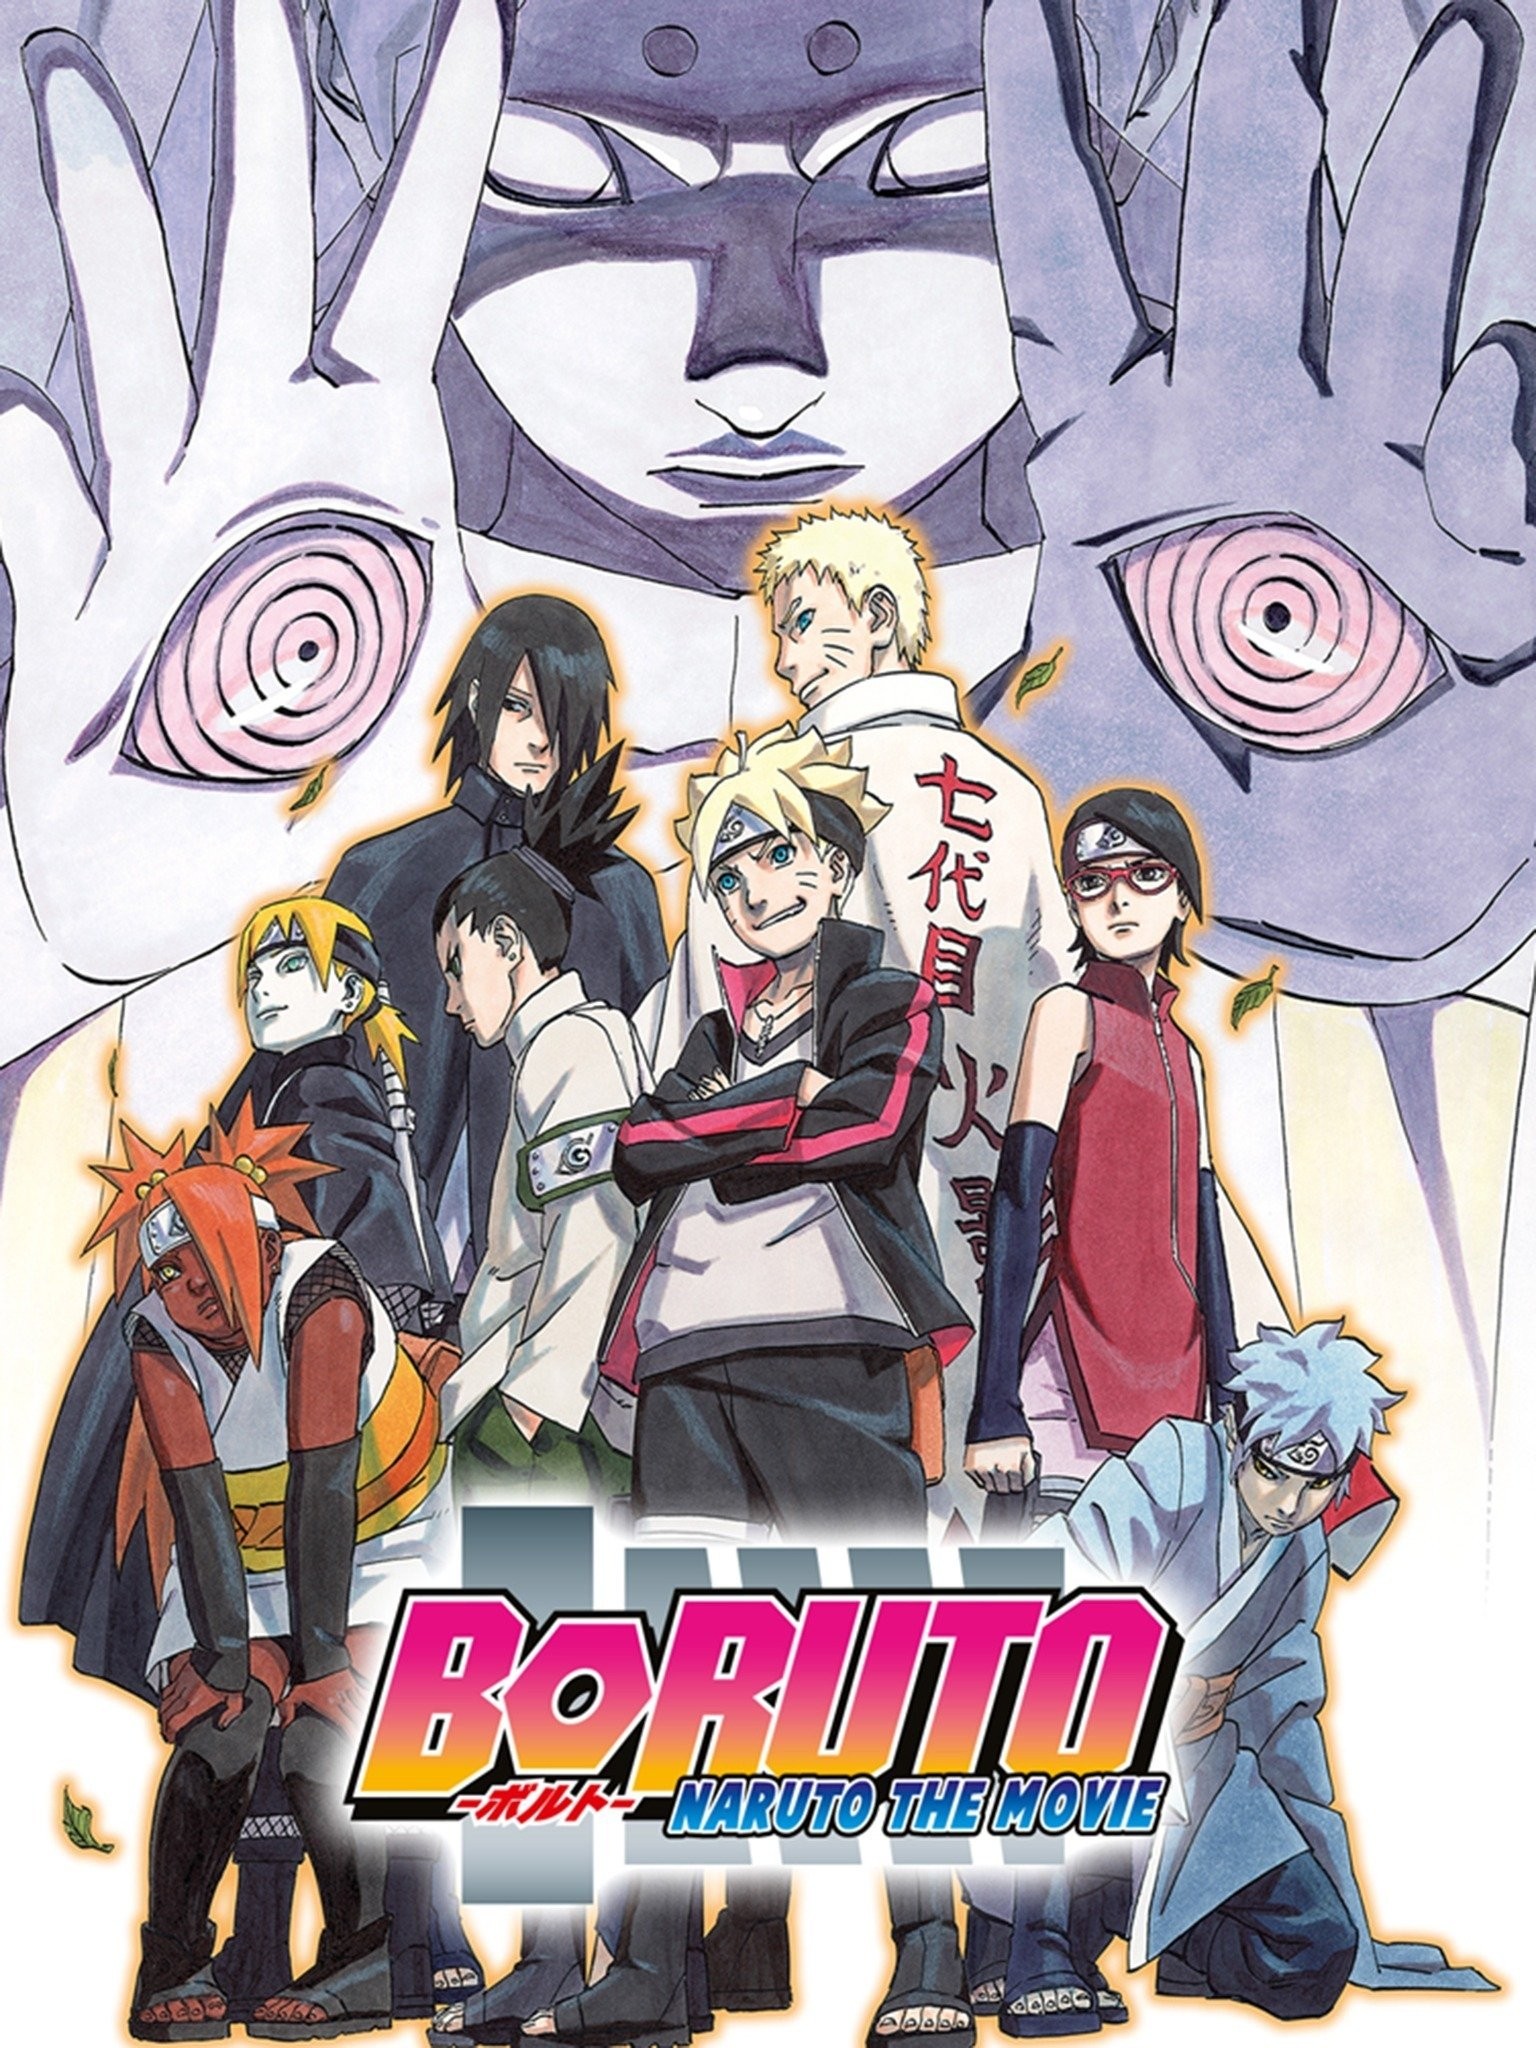 Watch Boruto: Naruto Next Generations Set 5